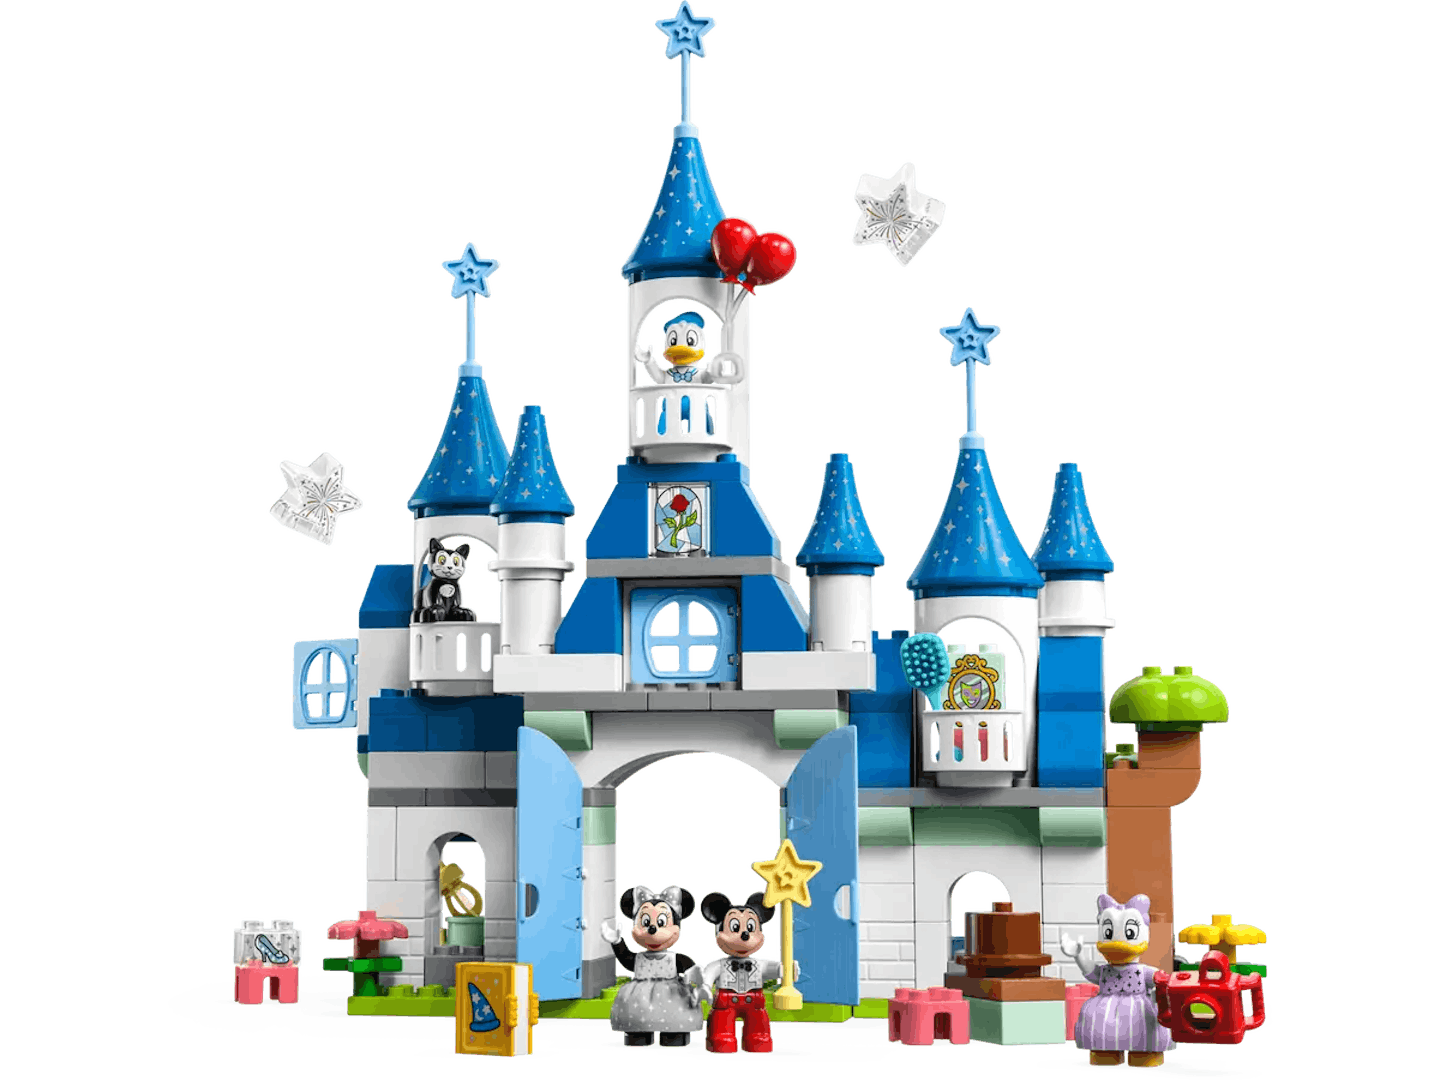 Lego Duplo 3in1 Magical Castle - Lego Black Friday deals